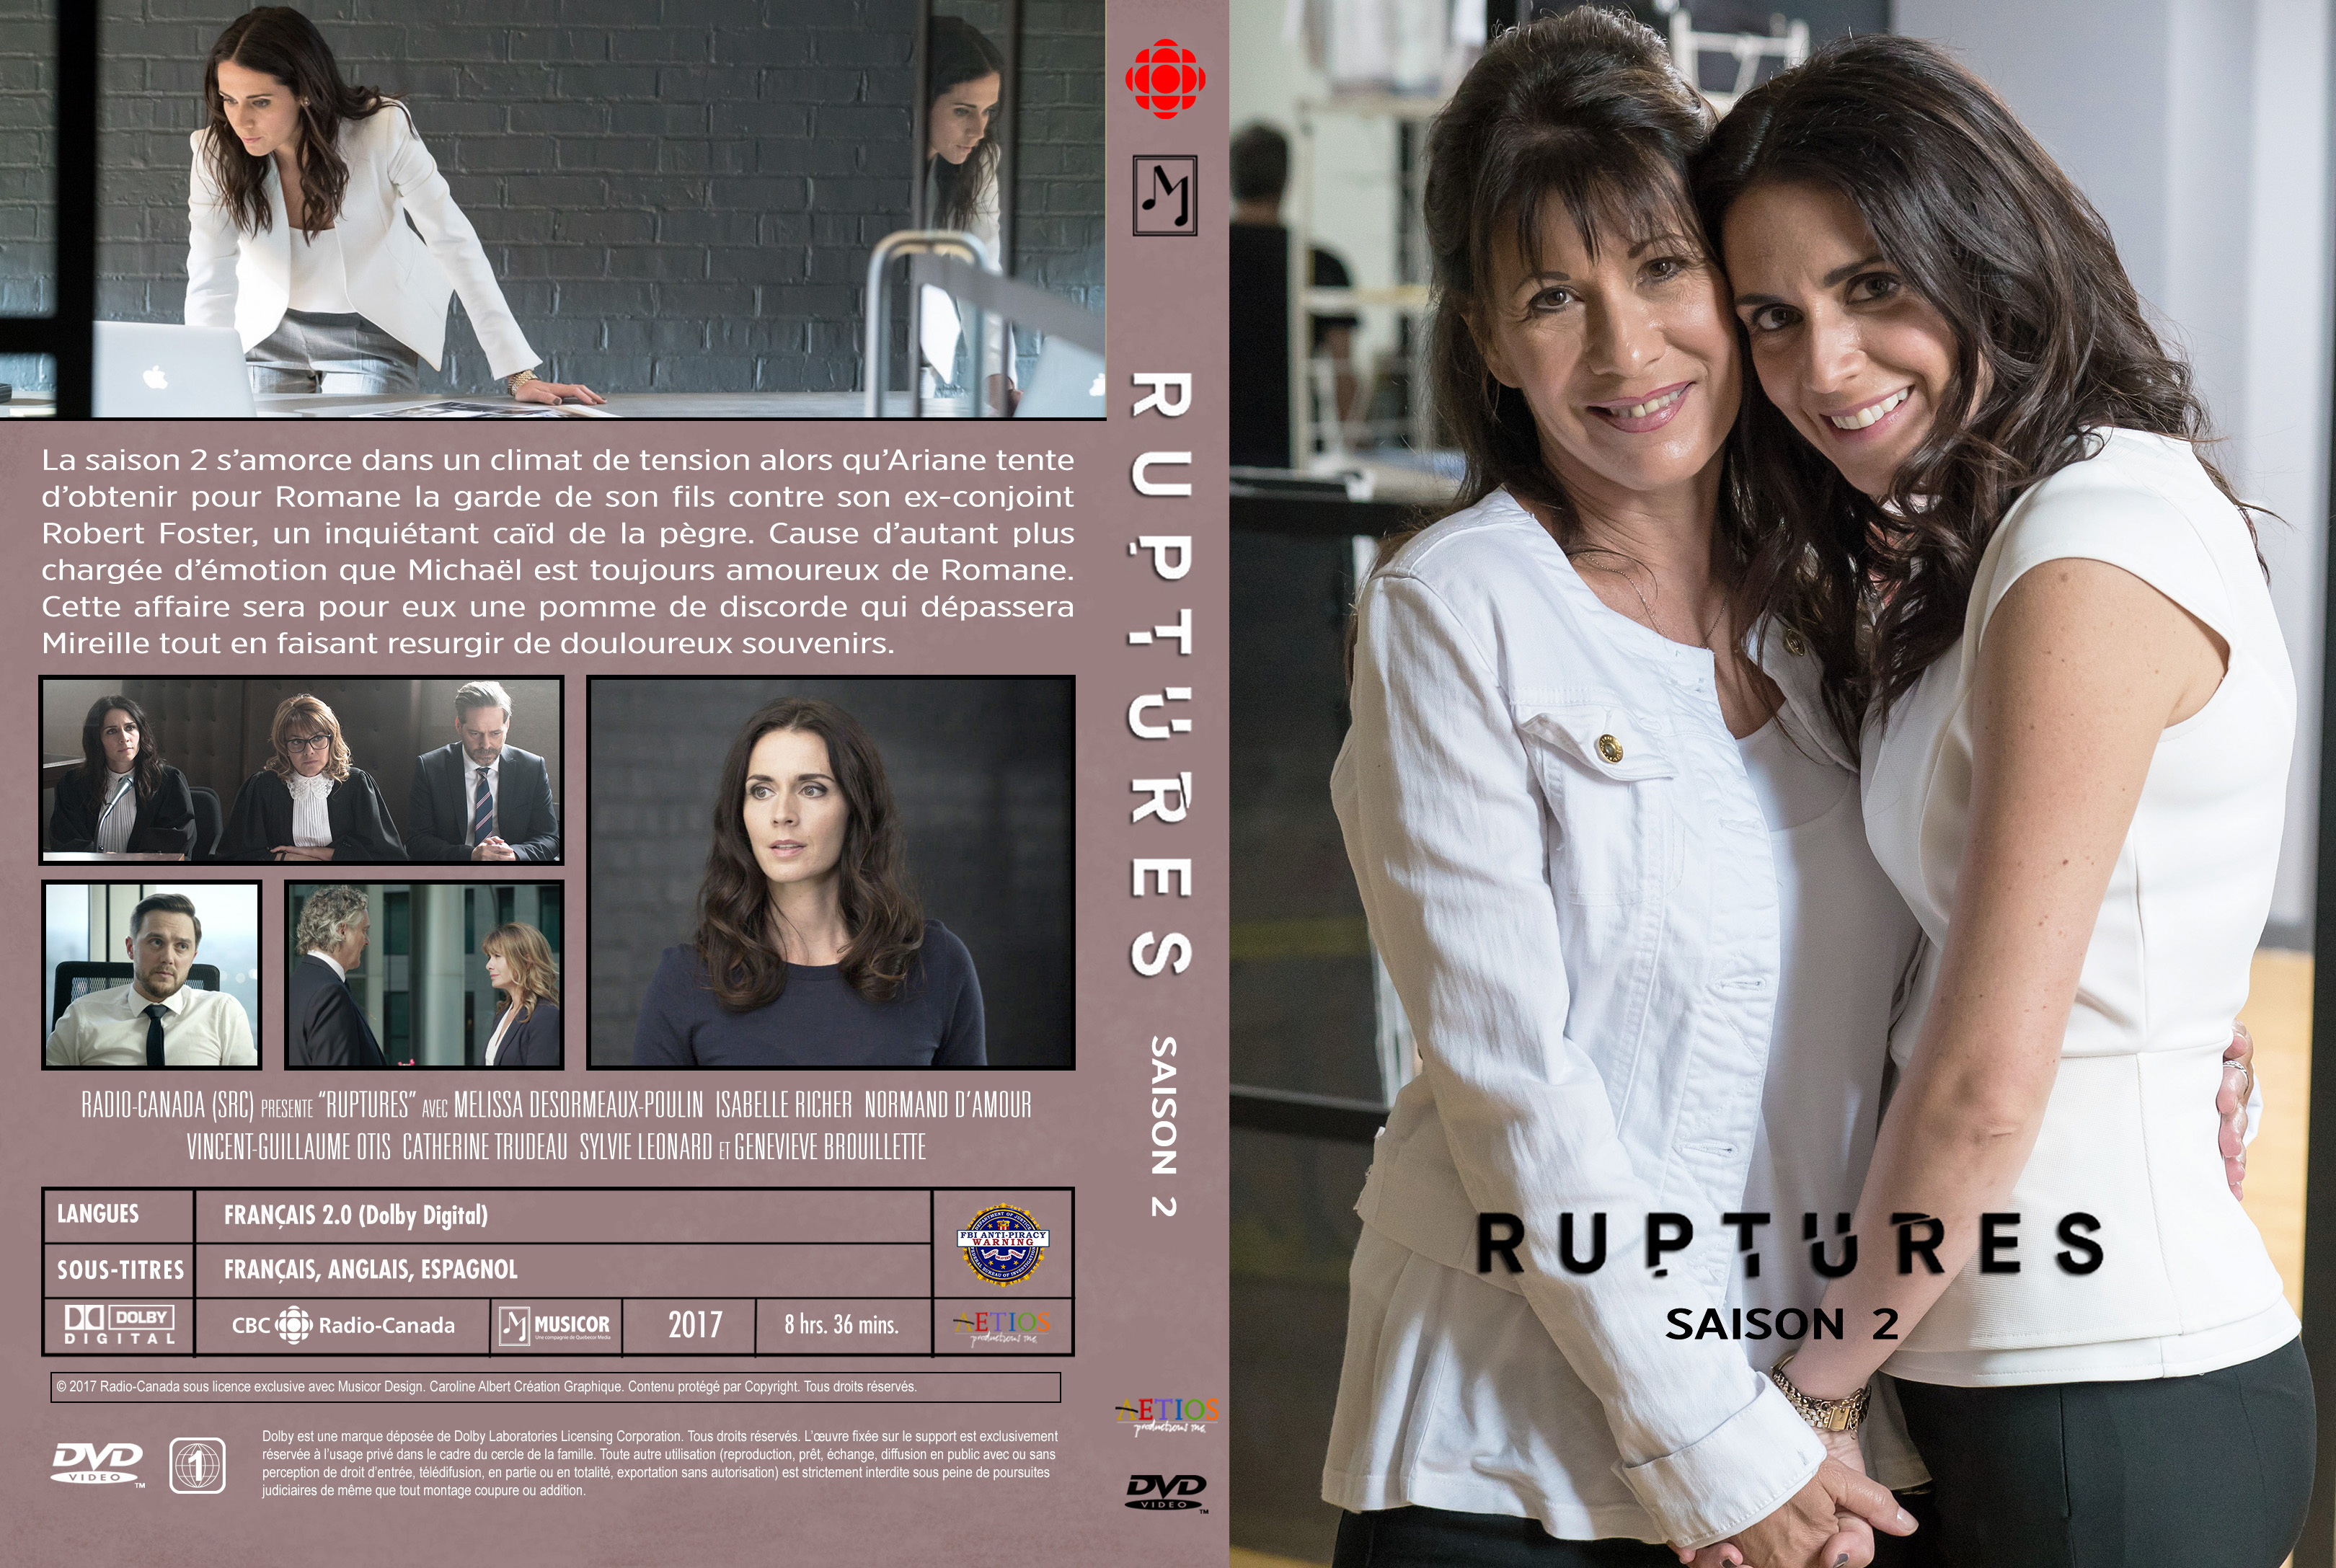 Jaquette DVD Ruptures Saison 2 custom